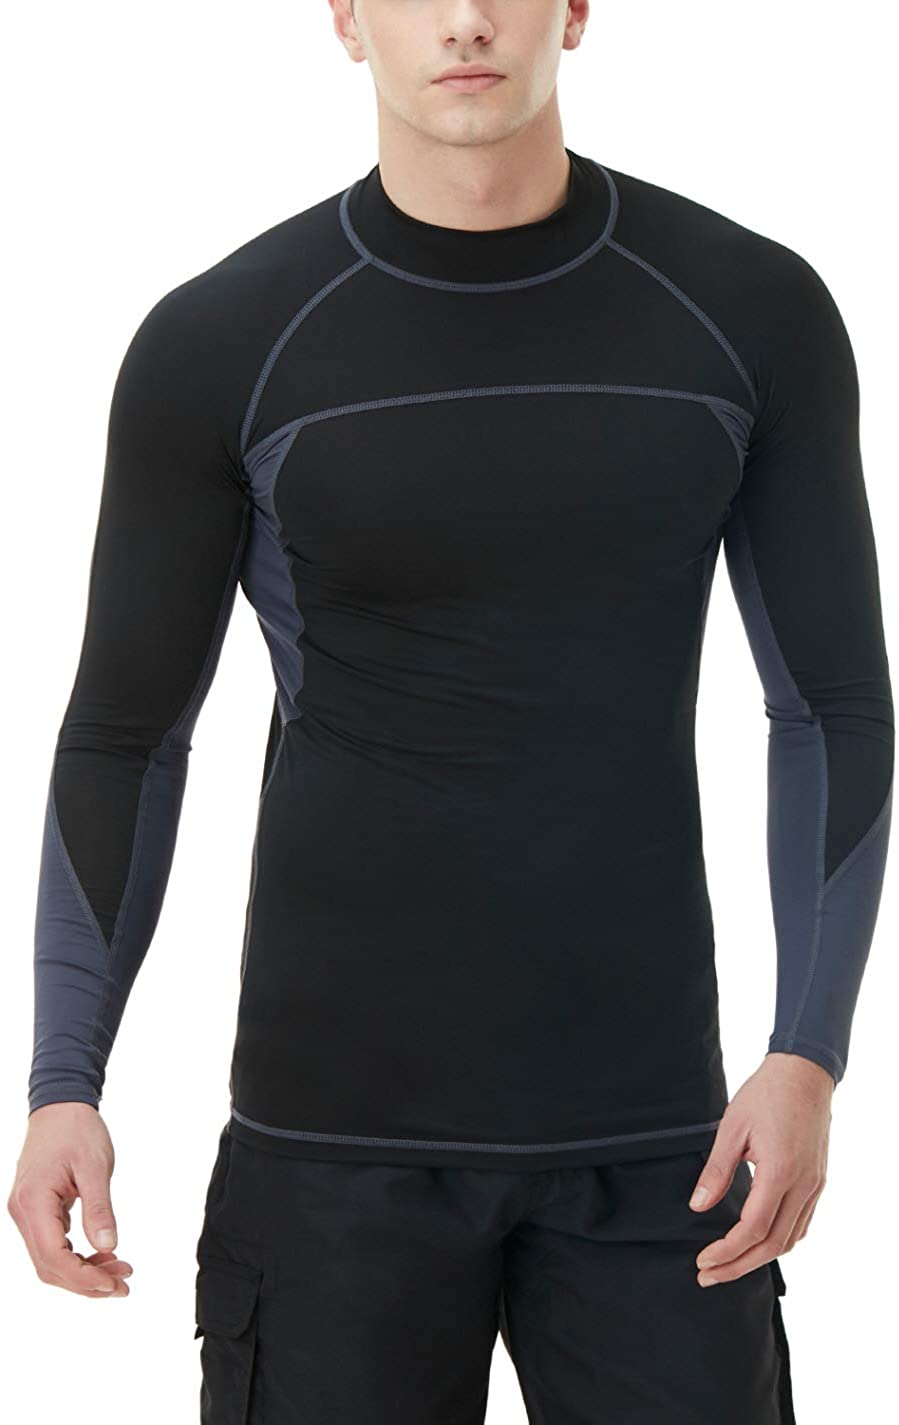 TSLA Men's Rashguard Swim Shirts UPF 50 Loose-Fit Long Sleeve Shirts Cool Running Workout SPF/UV Tee Shirts 